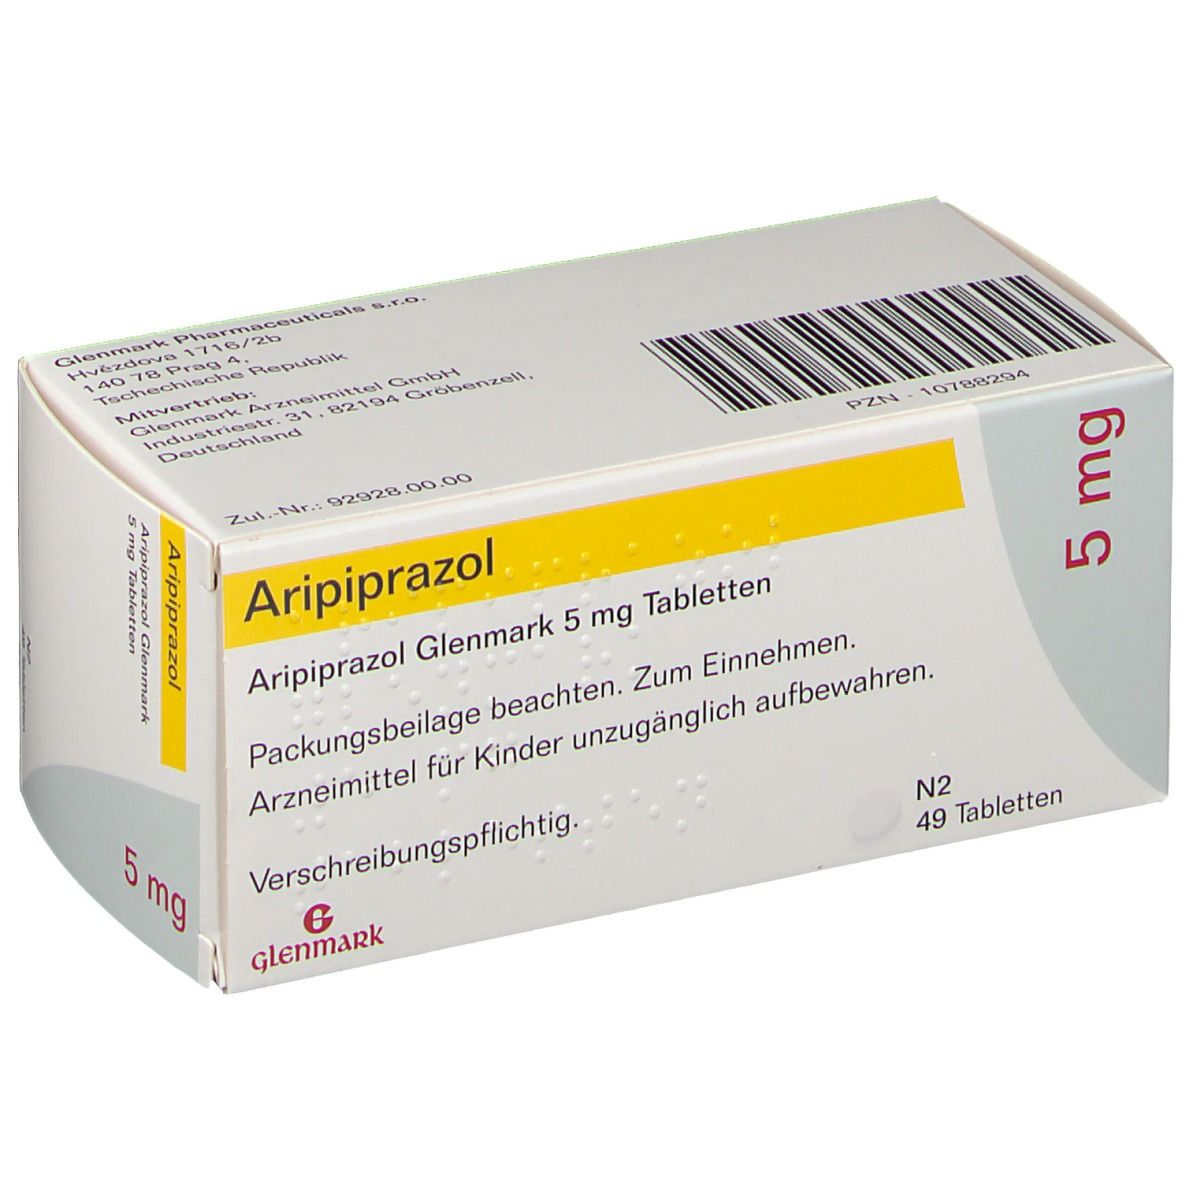 Aripiprazol Glenmark 5 mg